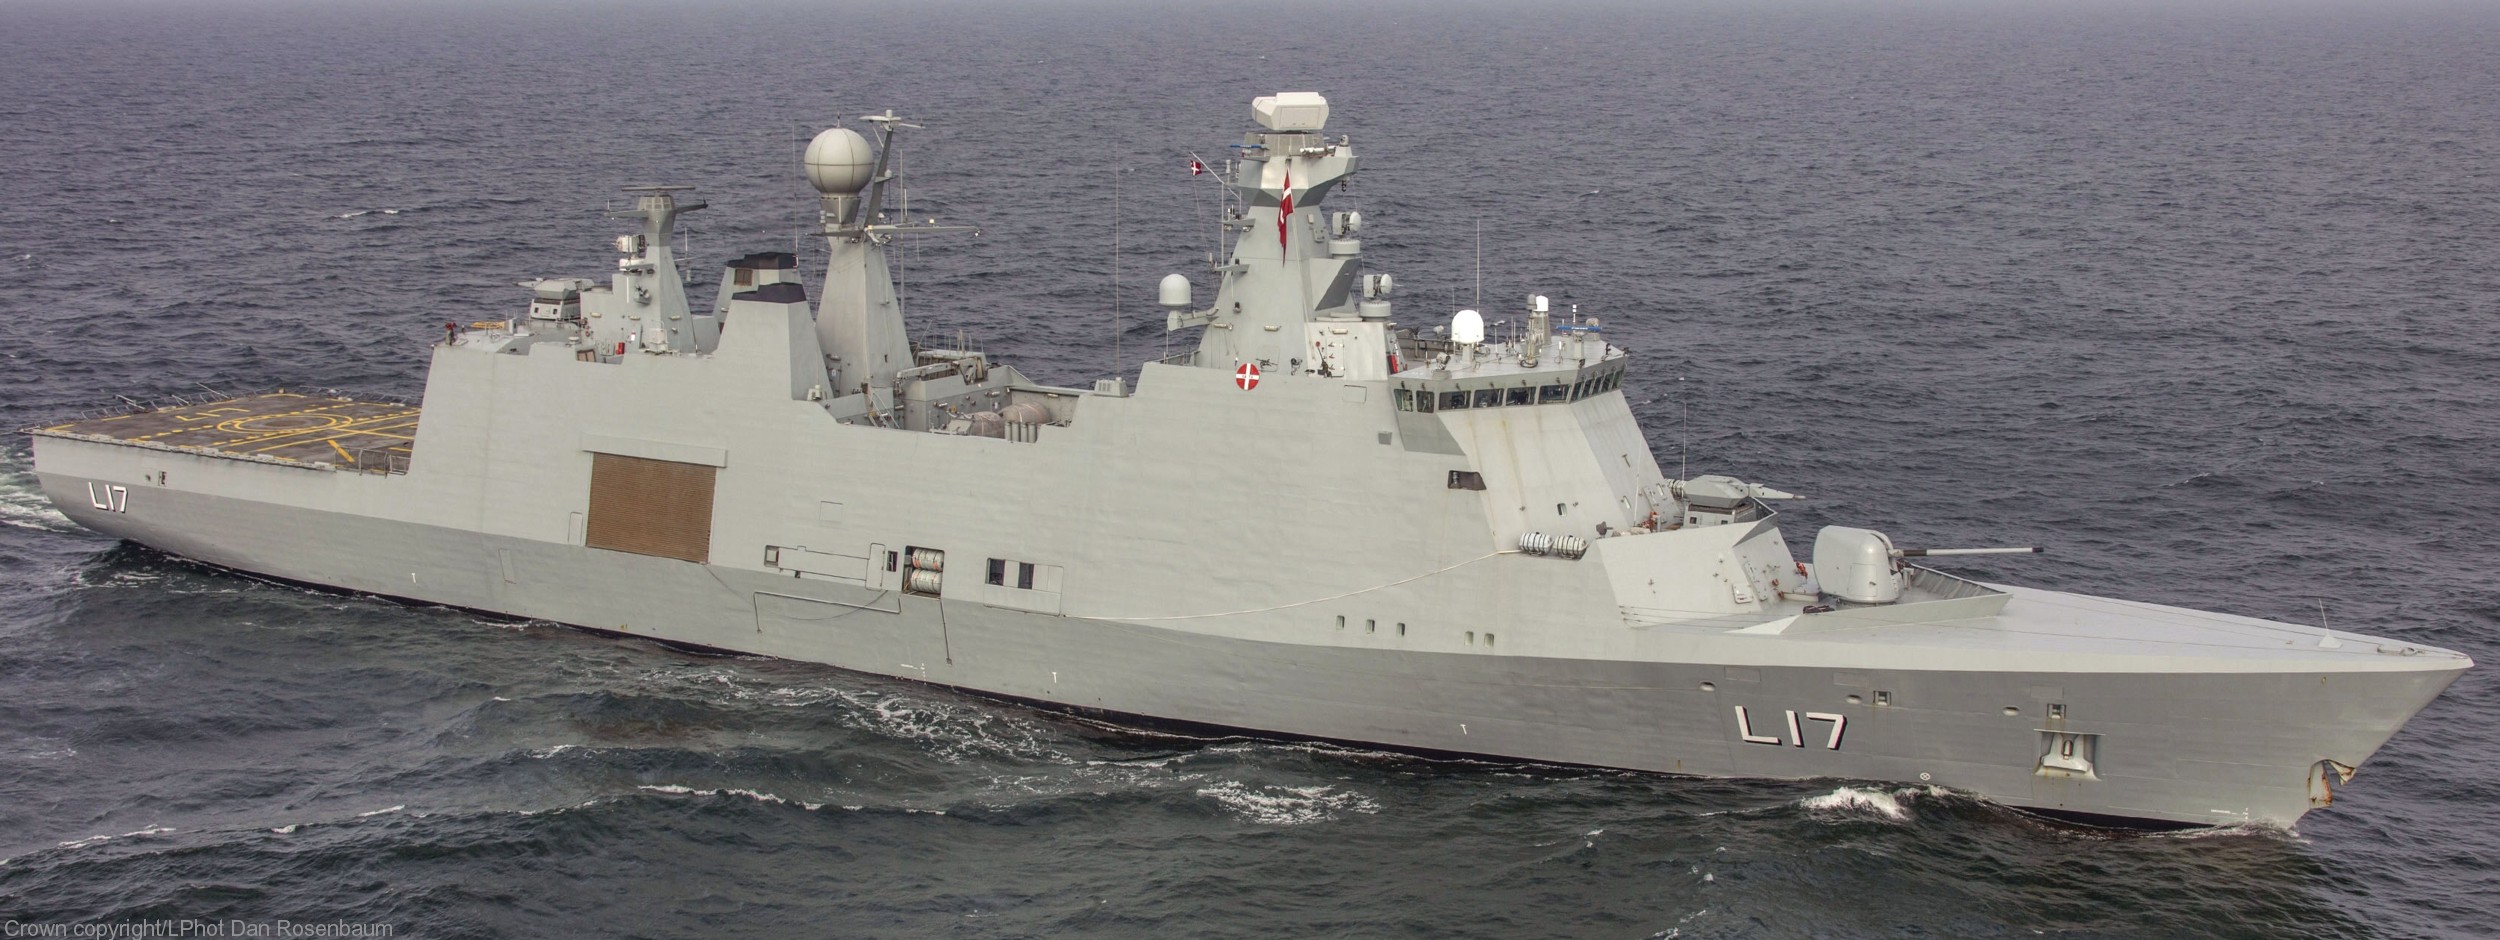 f-342 hdms esbern snare l-17 frigate command support ship royal danish navy 80